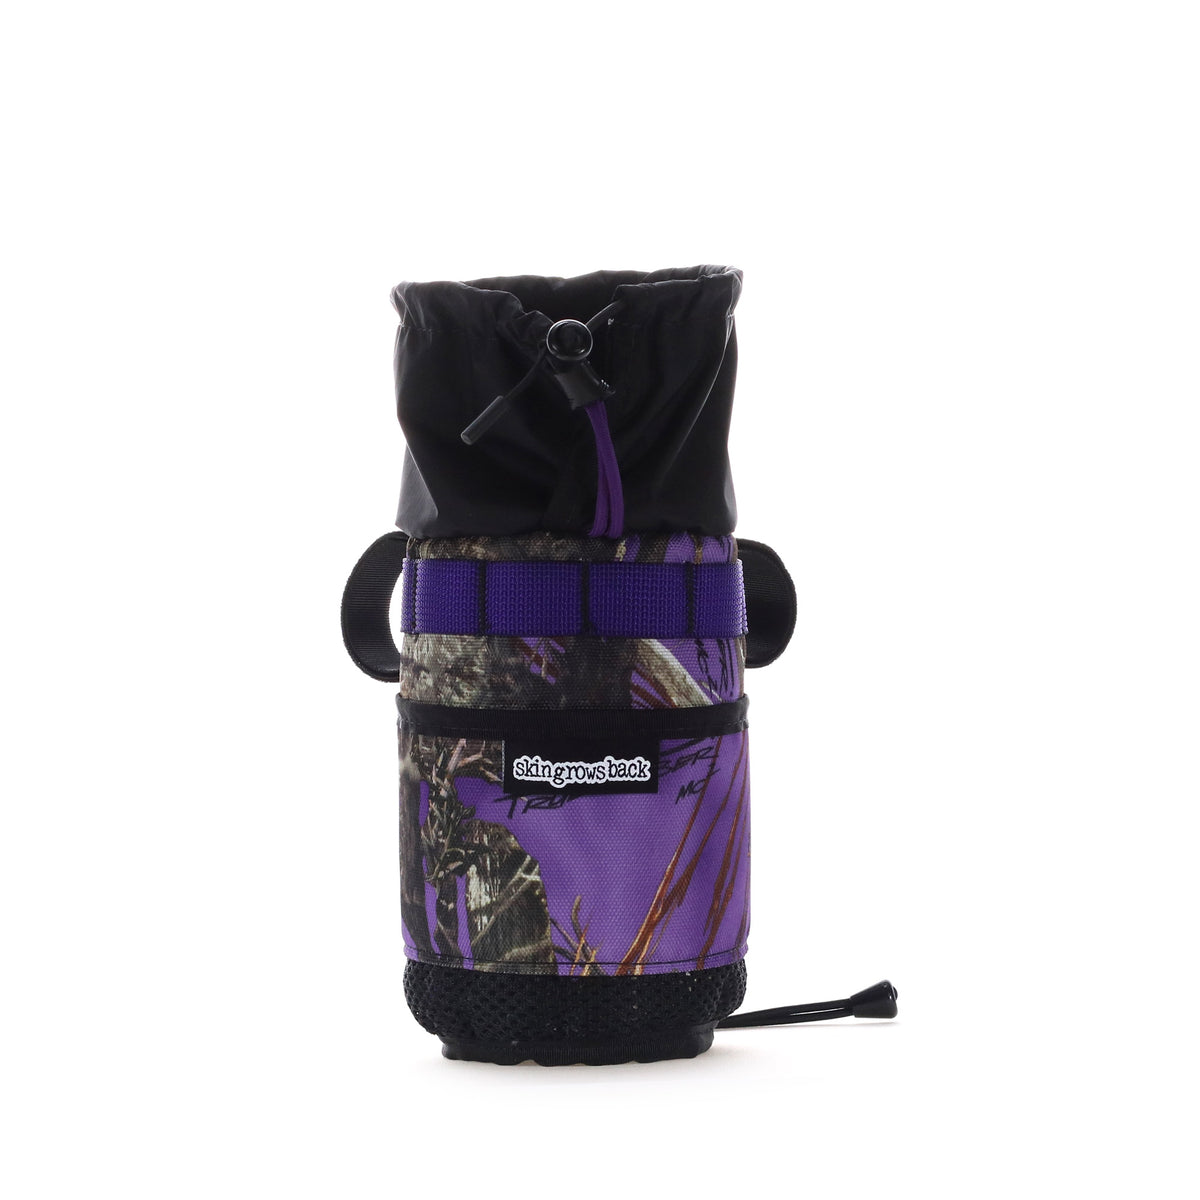 skingrowsback snack stack stem feed bag adventure gravel bike vampire purple camo